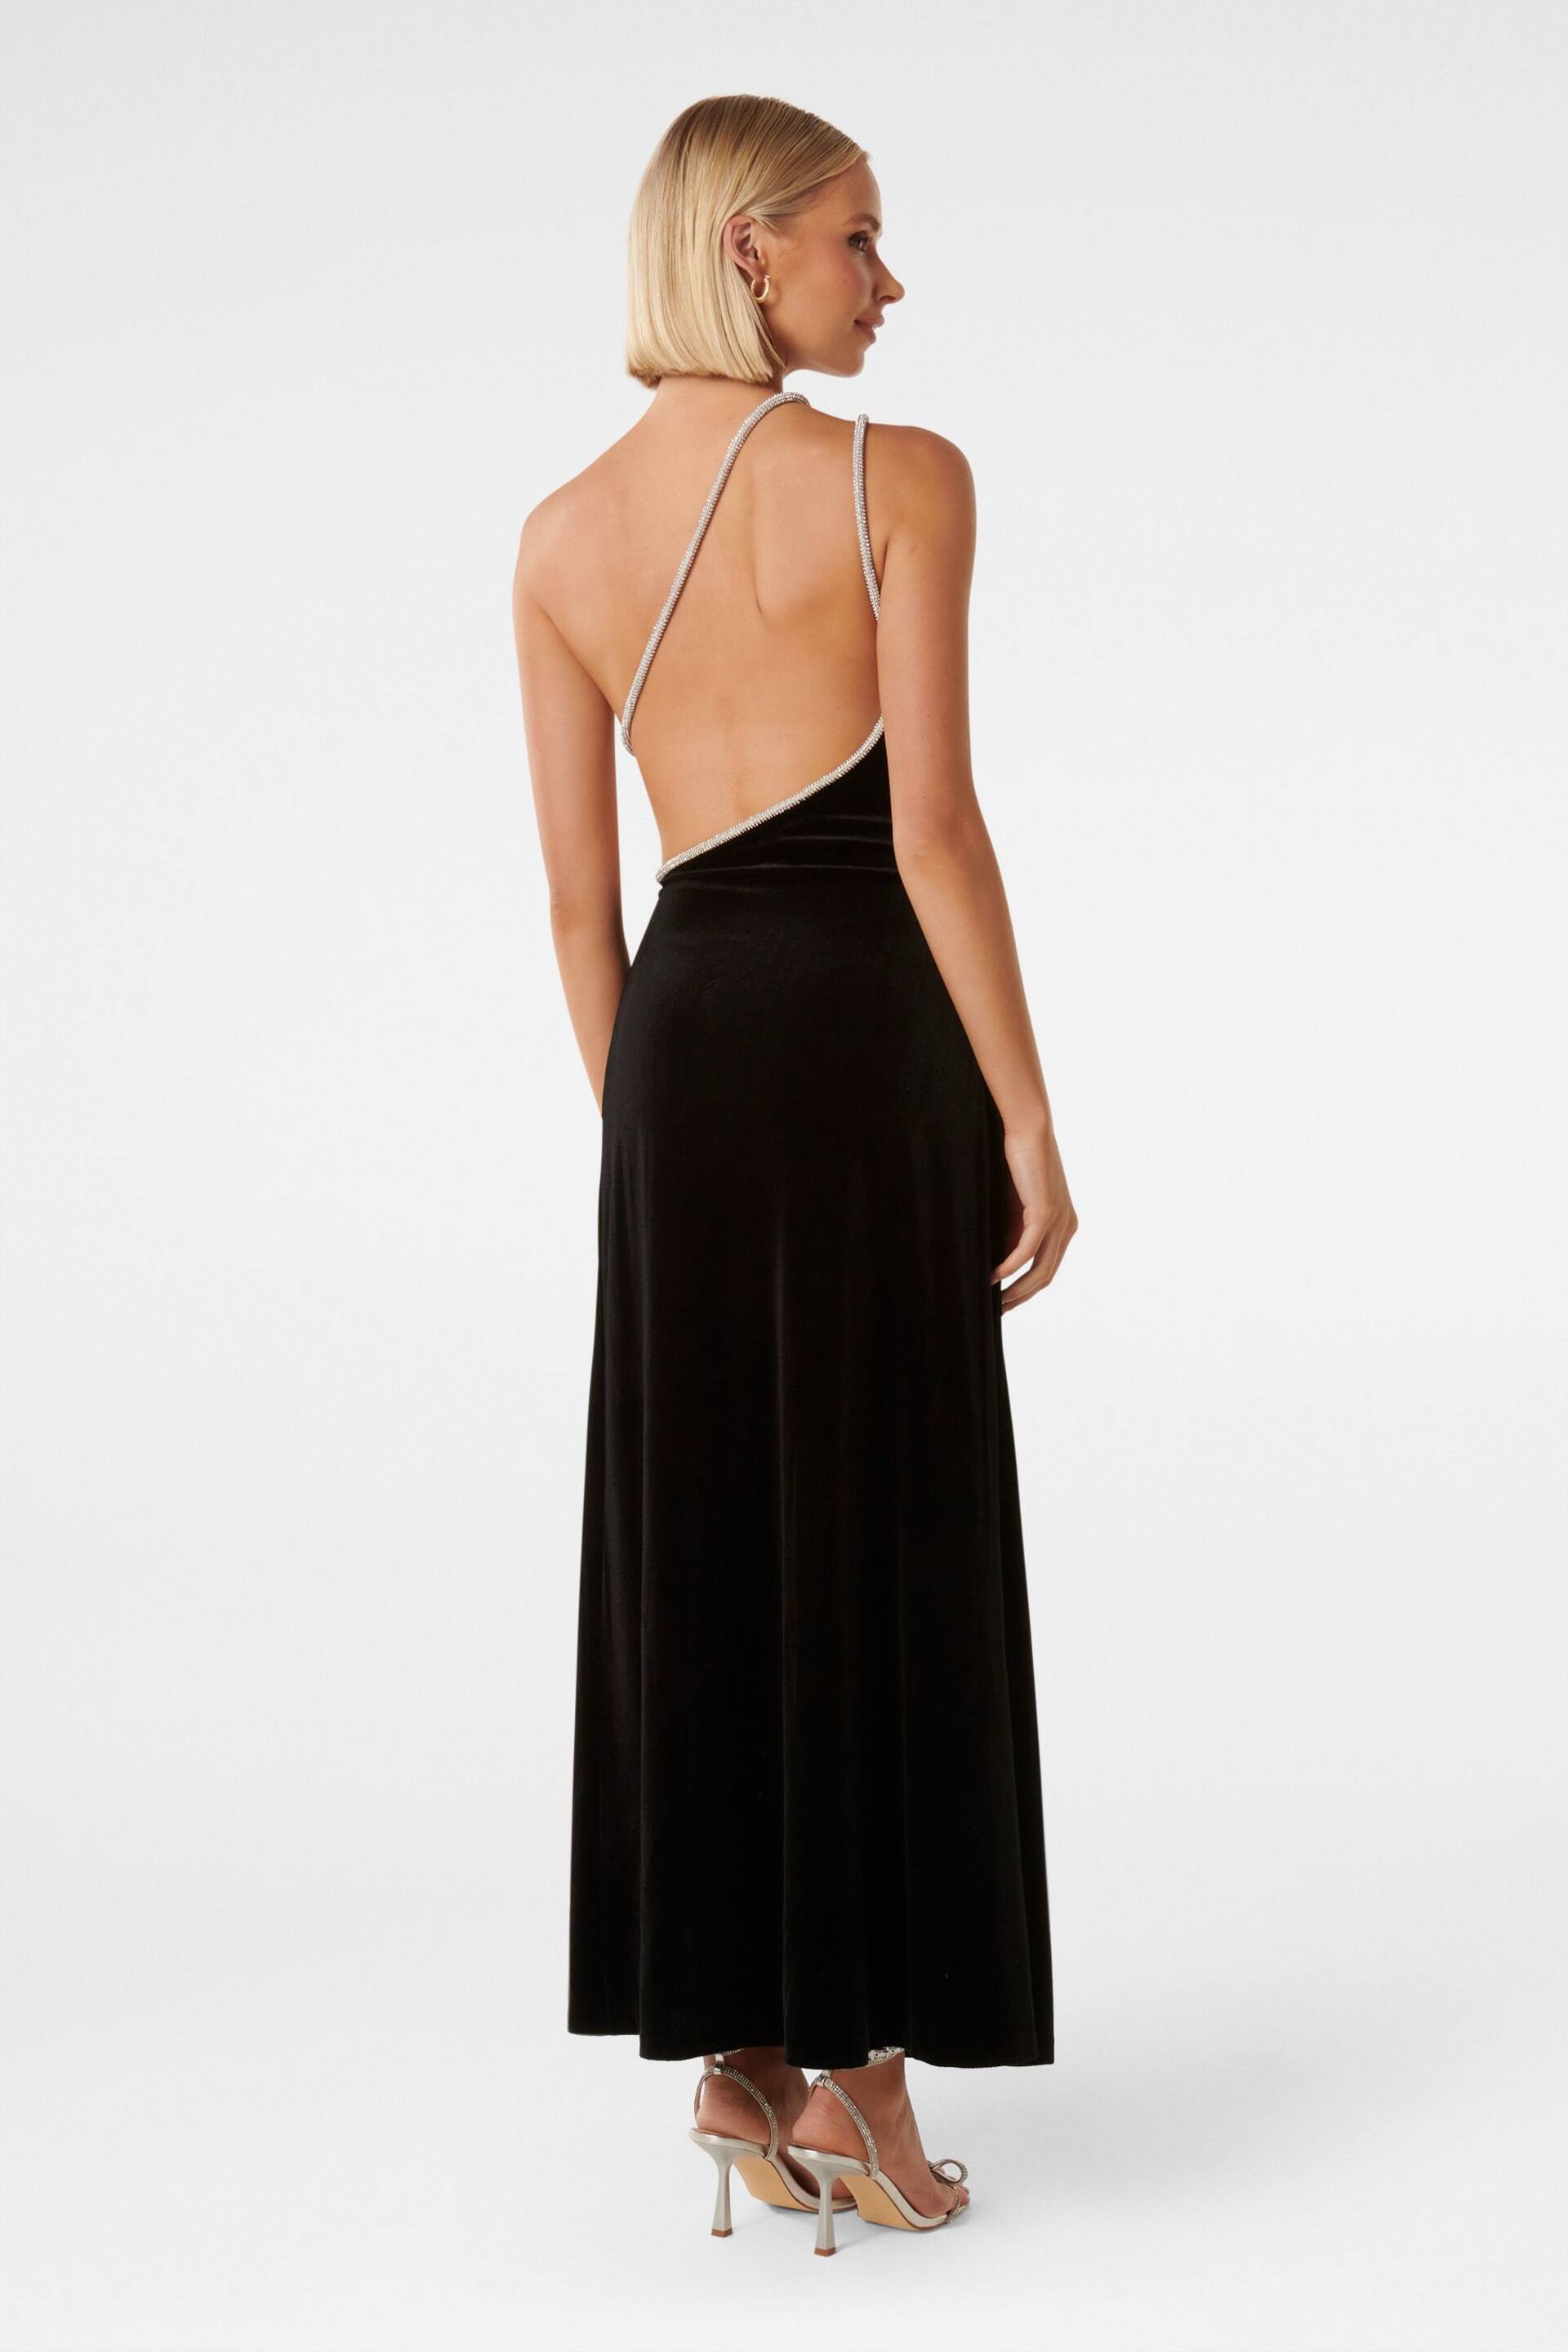 Forever New Black Costanza Diamante Velvet Gown - Image 2 of 4